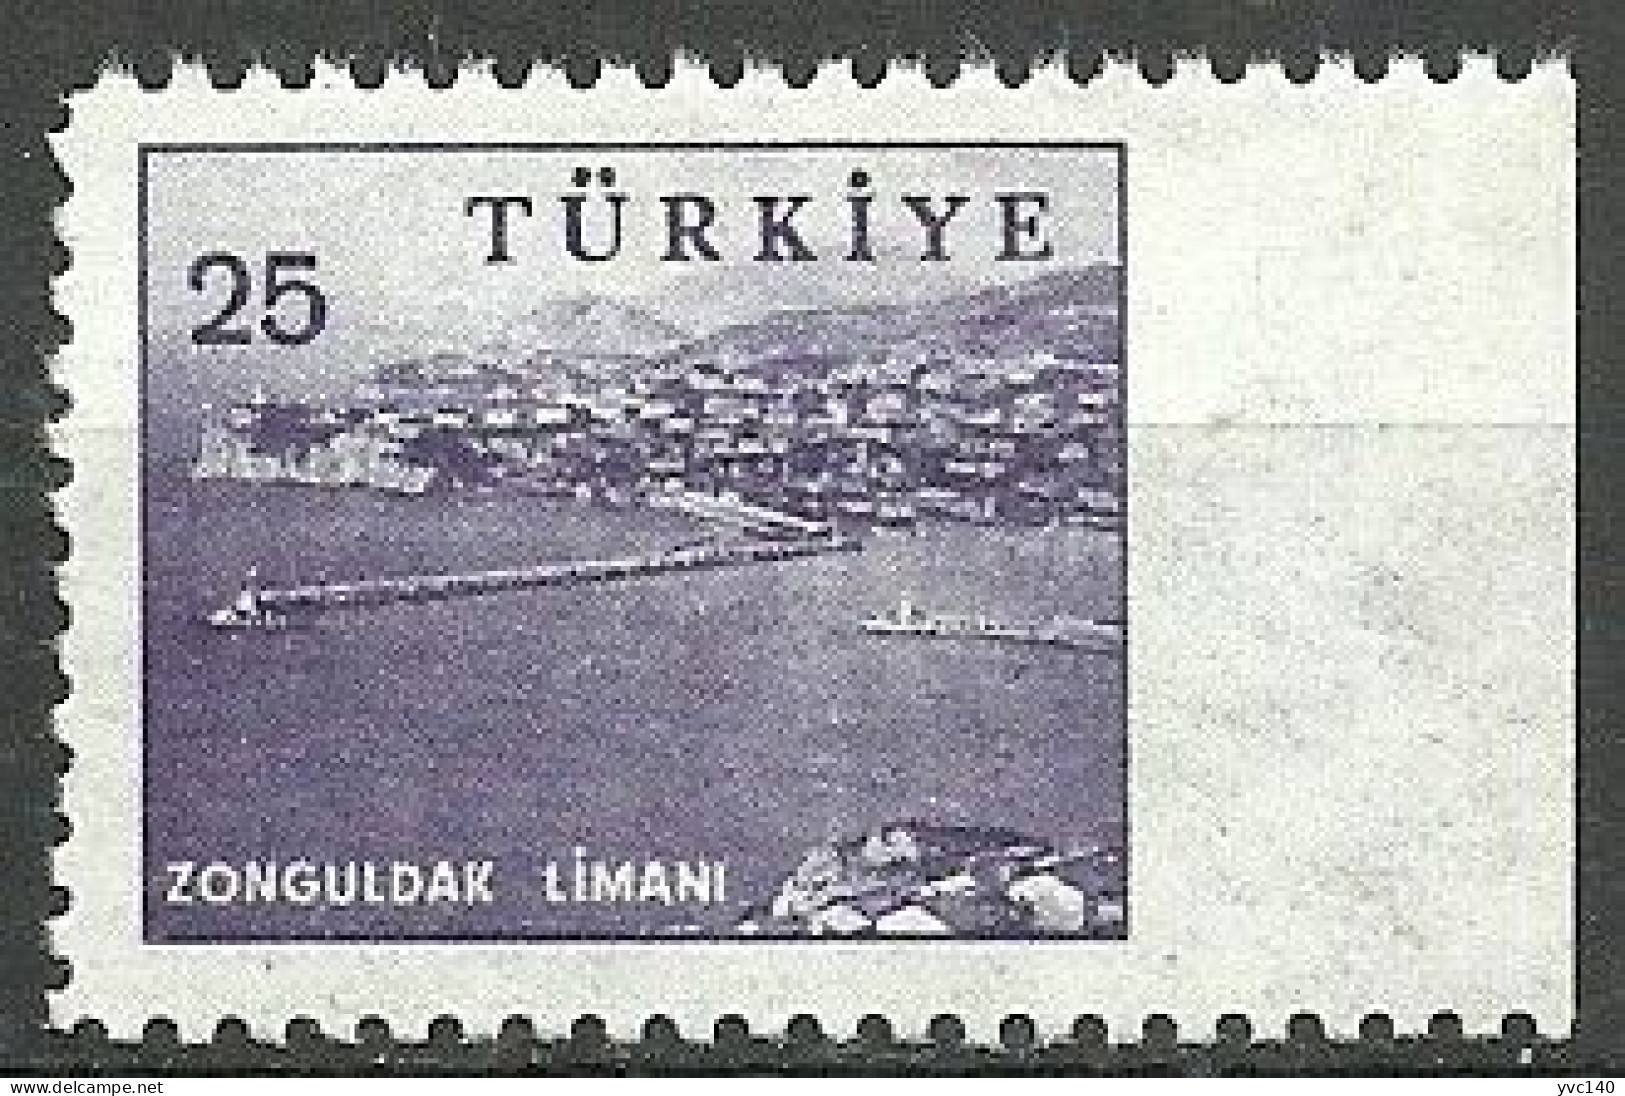 Turkey; 1959 Pictorial Postage Stamp 25 K. ERROR "Imperf. Edge" - Nuovi